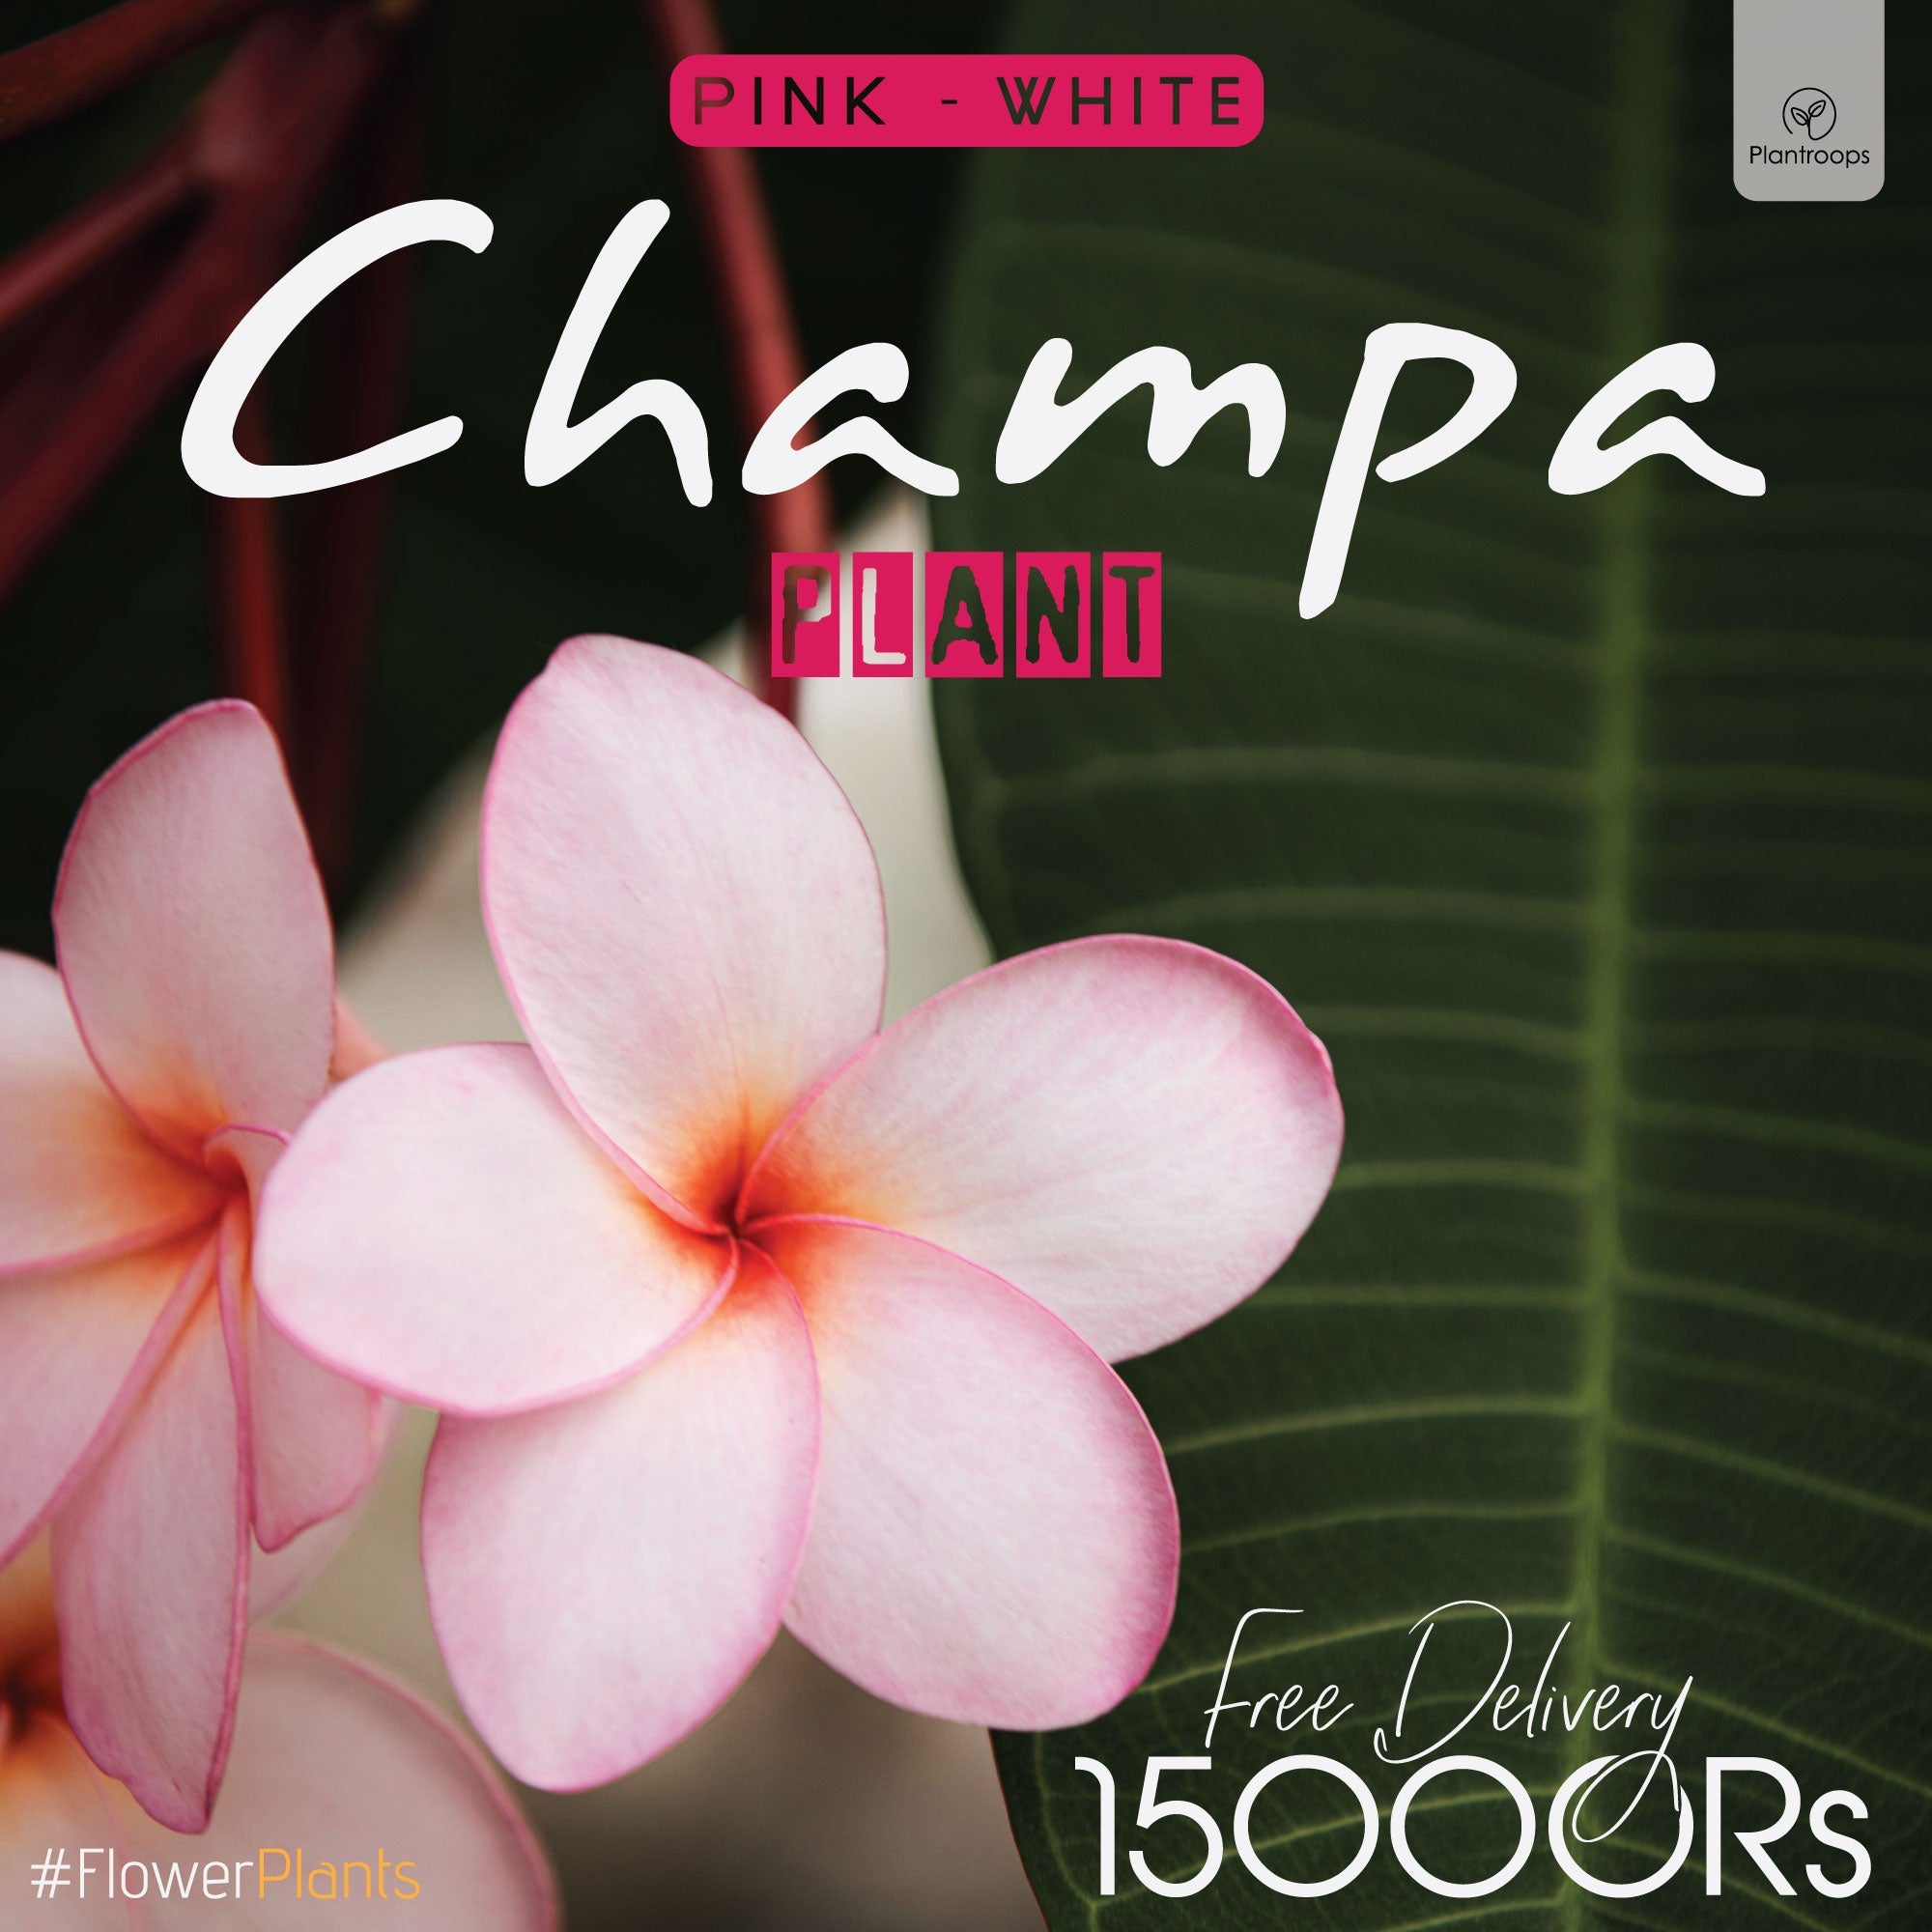 PINK - WHITE CHAMPA / PLUMERIA FLOWER PLANT